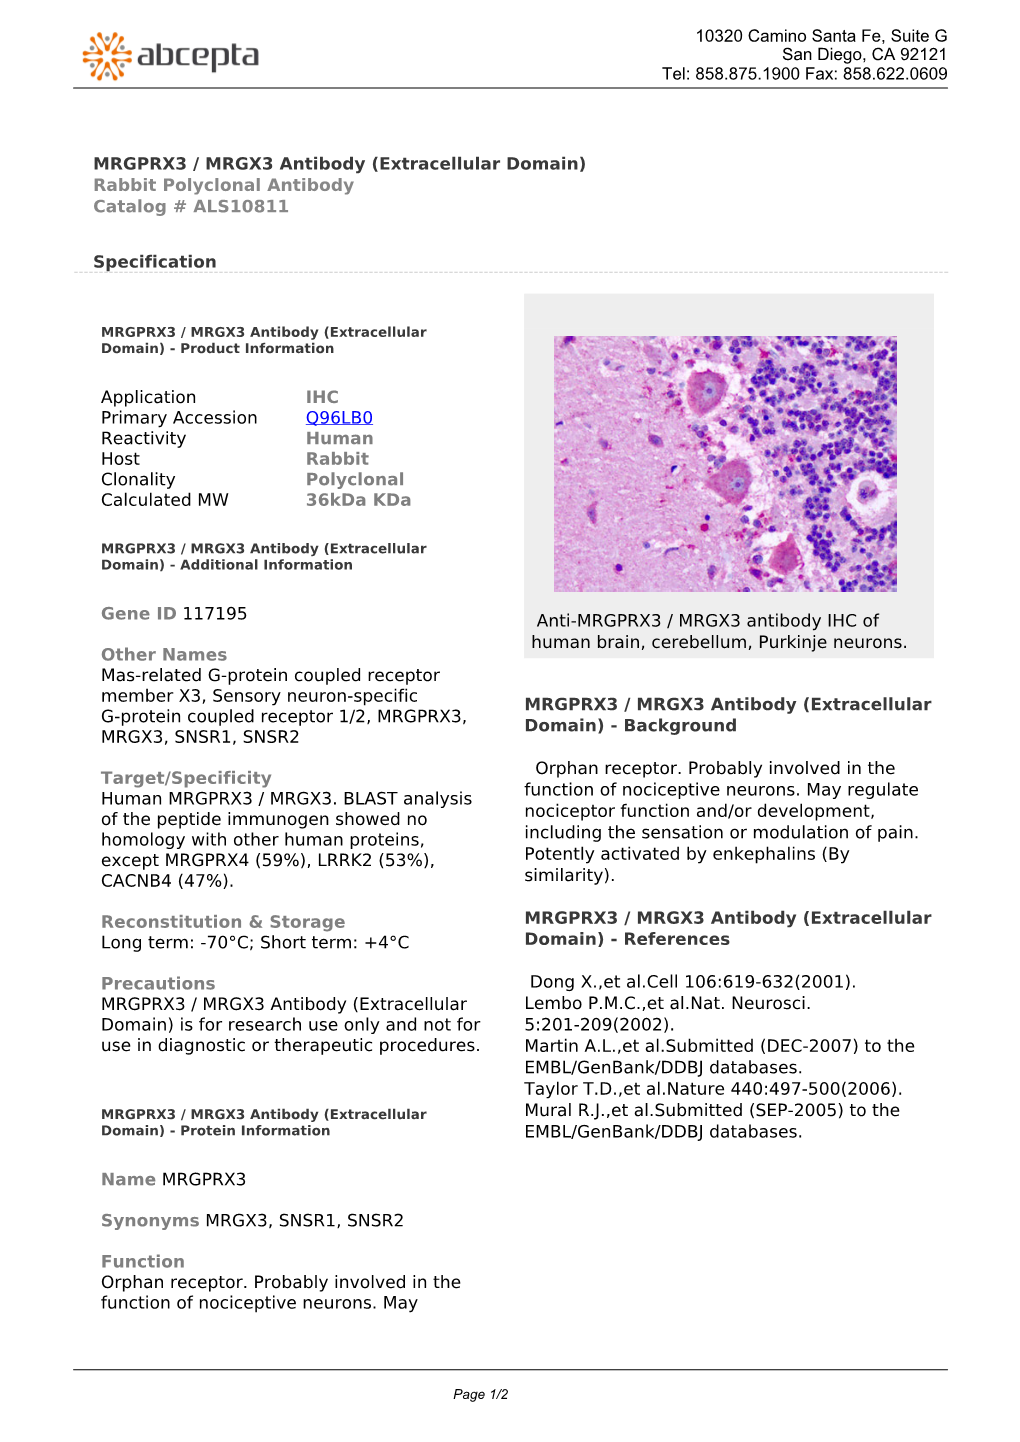 MRGPRX3 / MRGX3 Antibody (Extracellular Domain) Rabbit Polyclonal Antibody Catalog # ALS10811